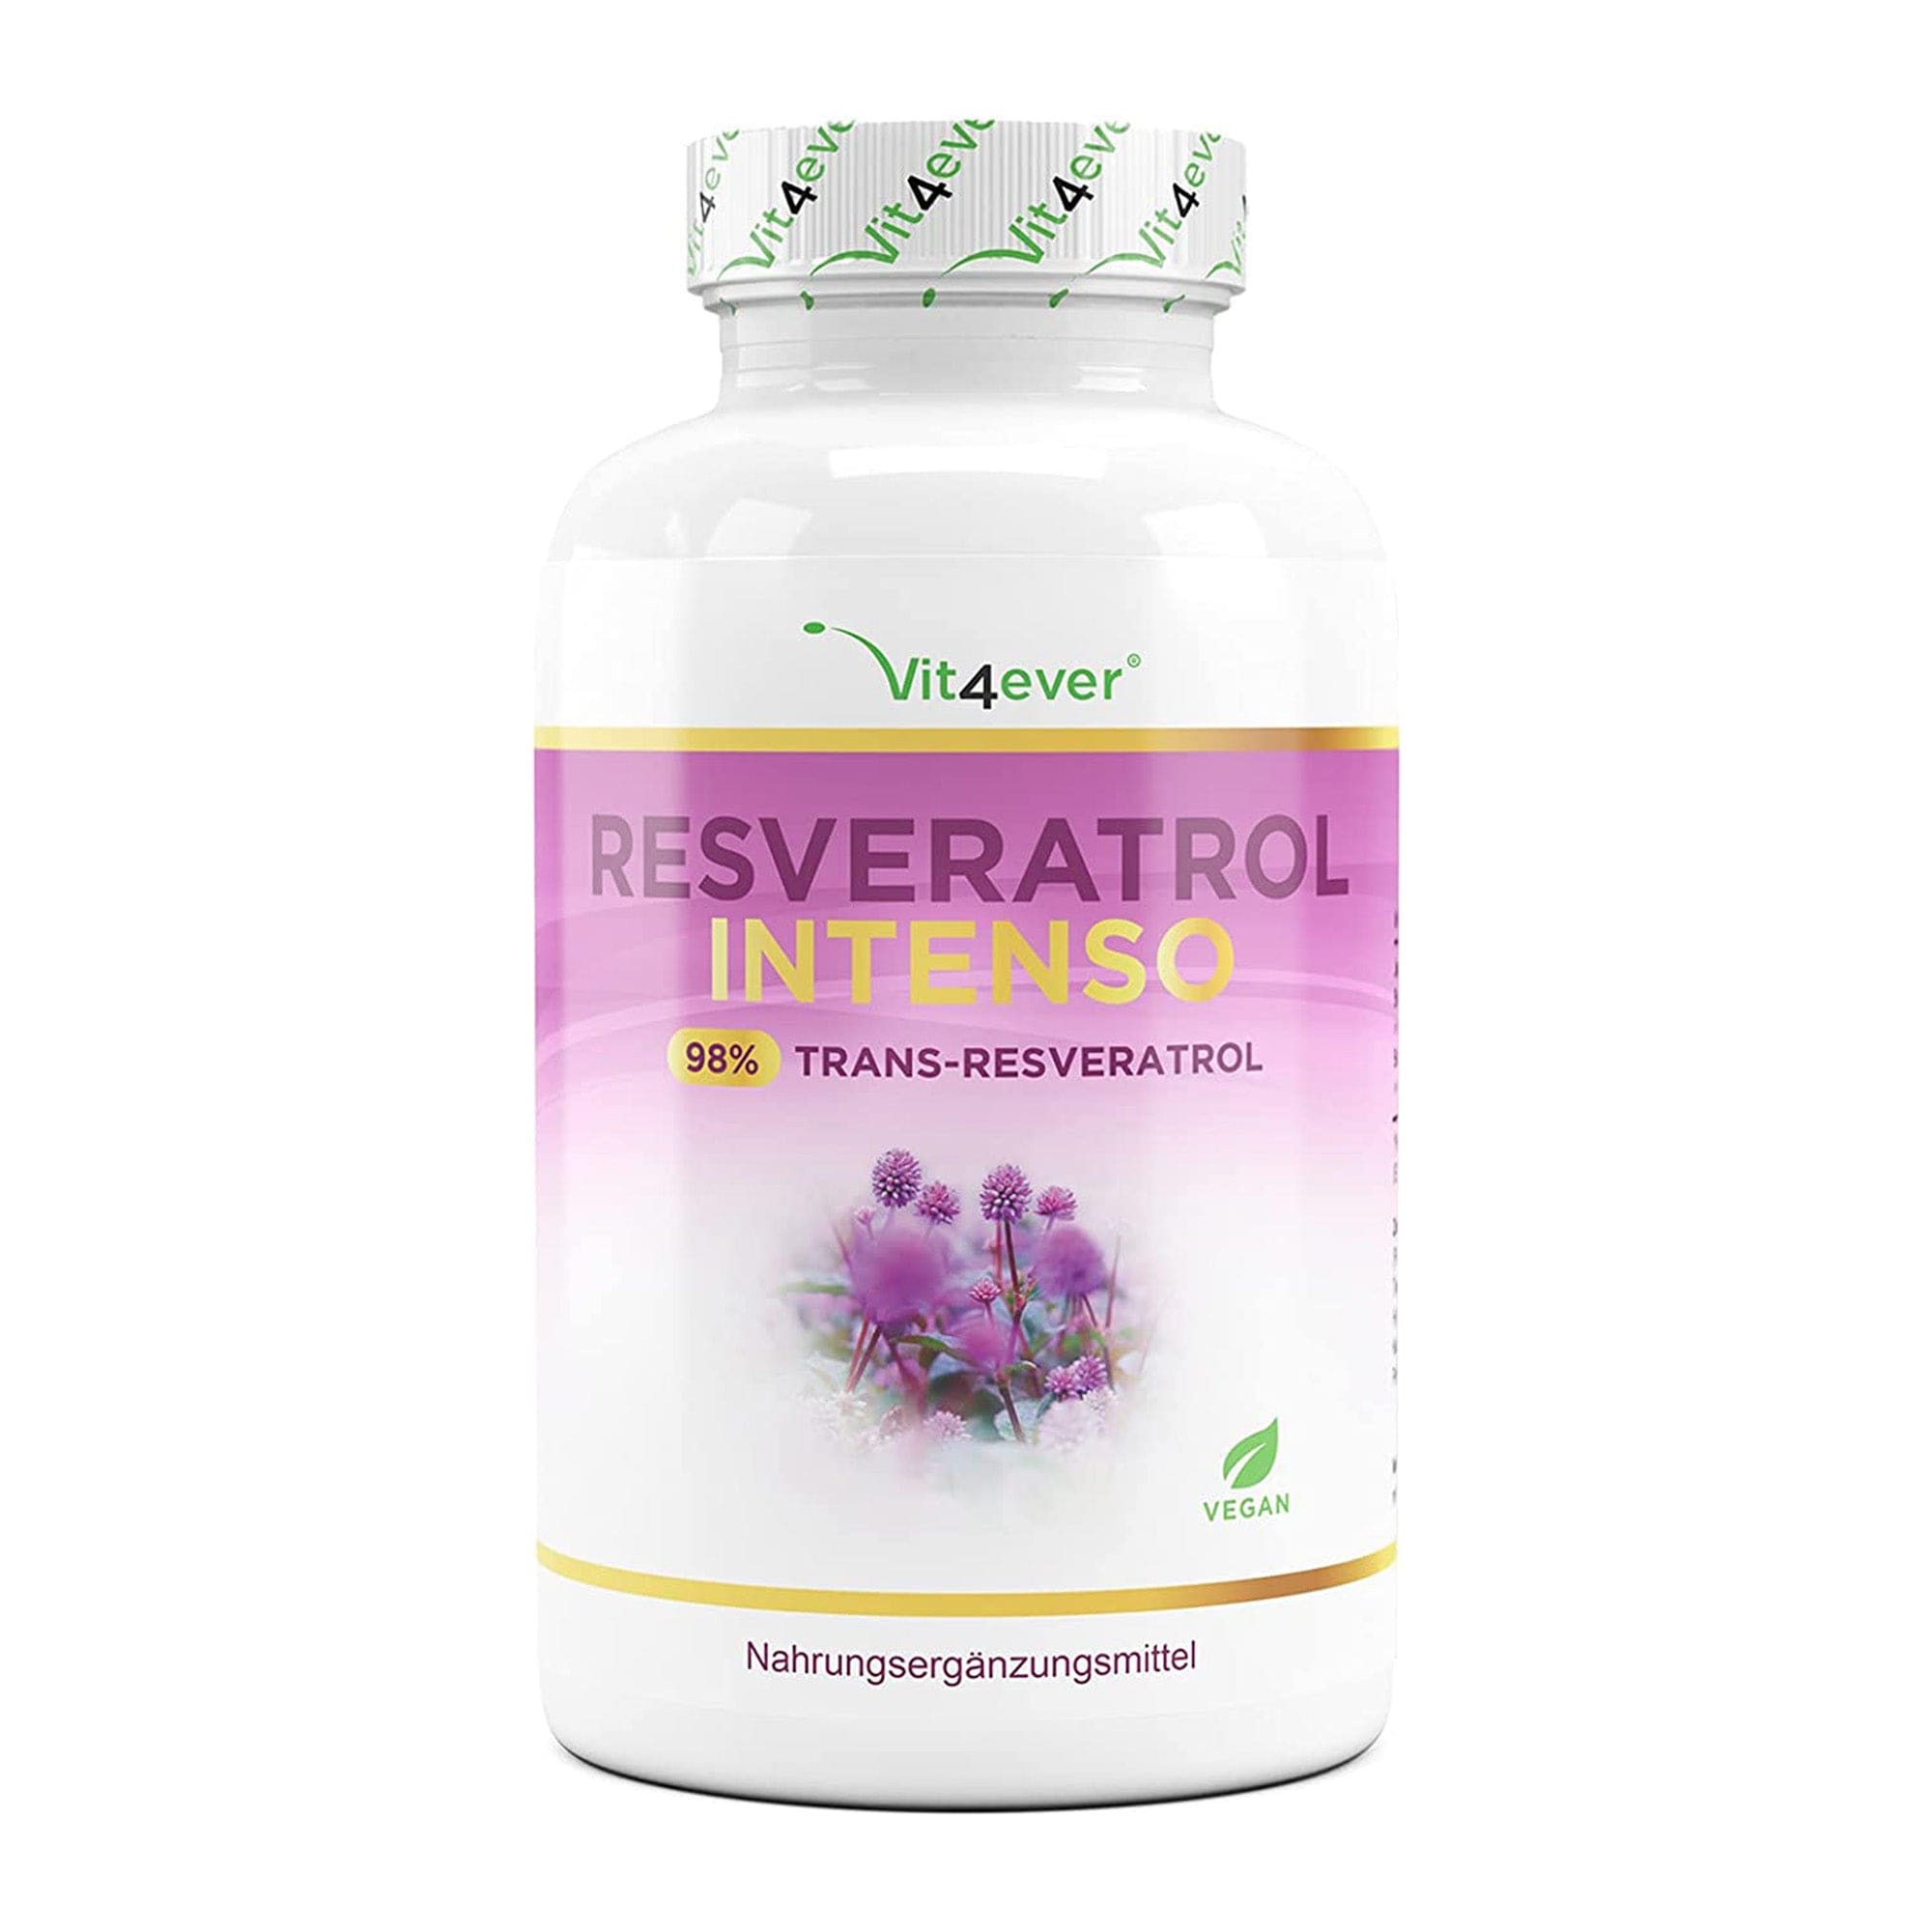 Vit4ever resveratrol 98% trans-resveratrol